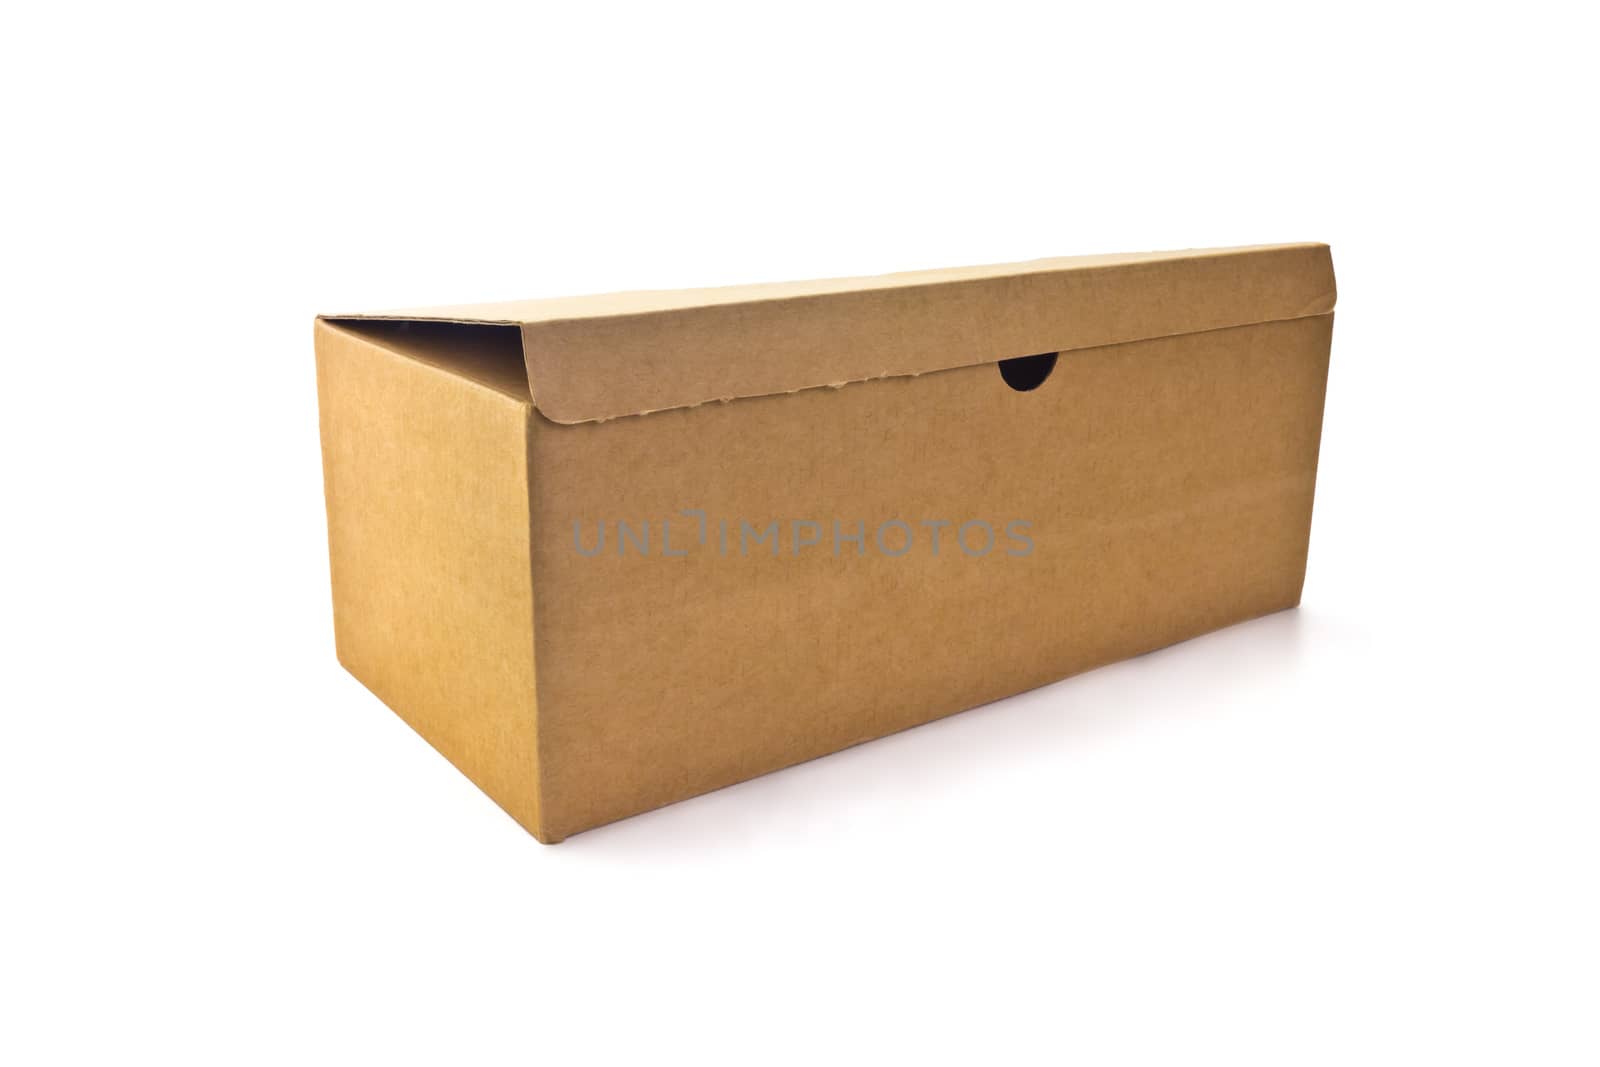 closed carton box on white background